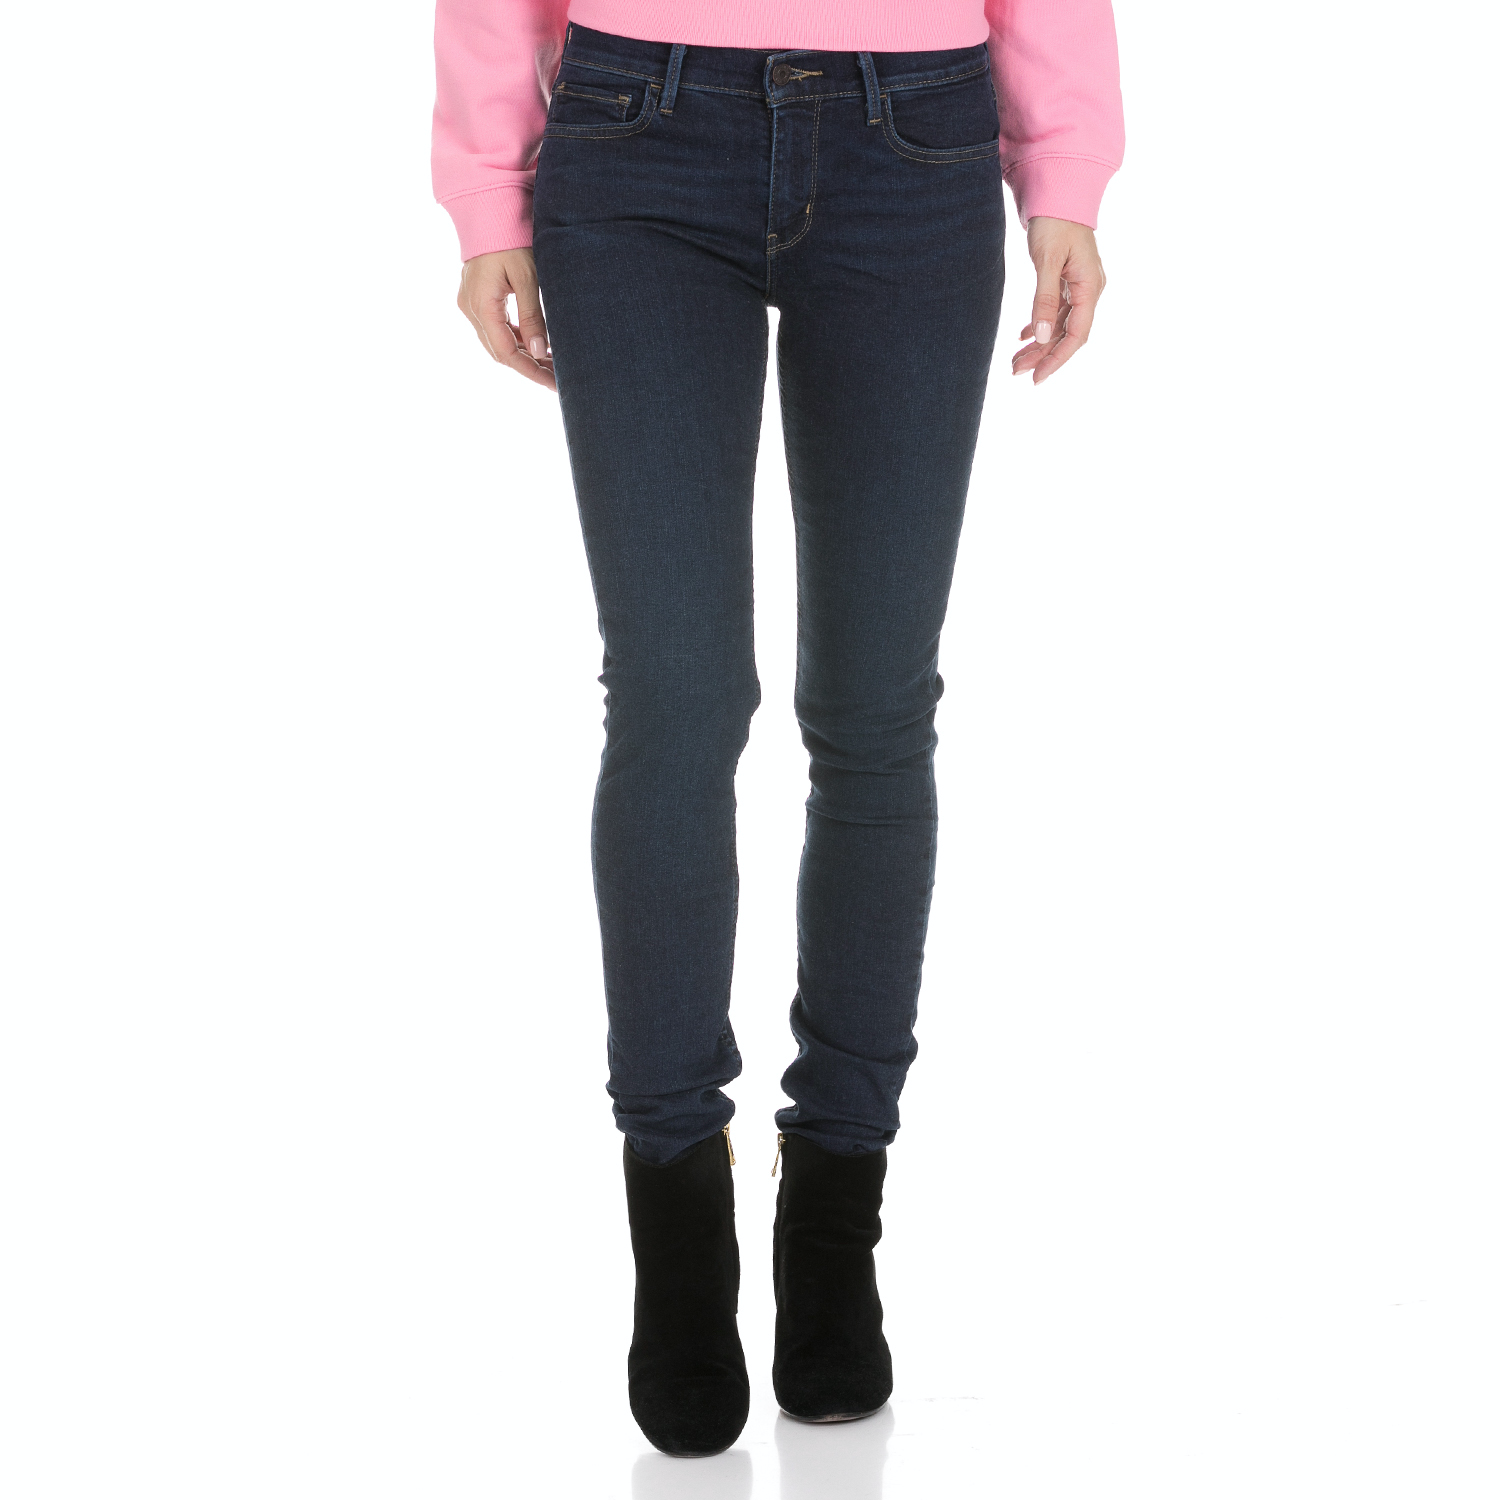 LEVI'S - Γυναικείο jean παντελόνι LEVI'S INNOVATION SUPER SKINNY μπλε Γυναικεία/Ρούχα/Τζίν/Skinny